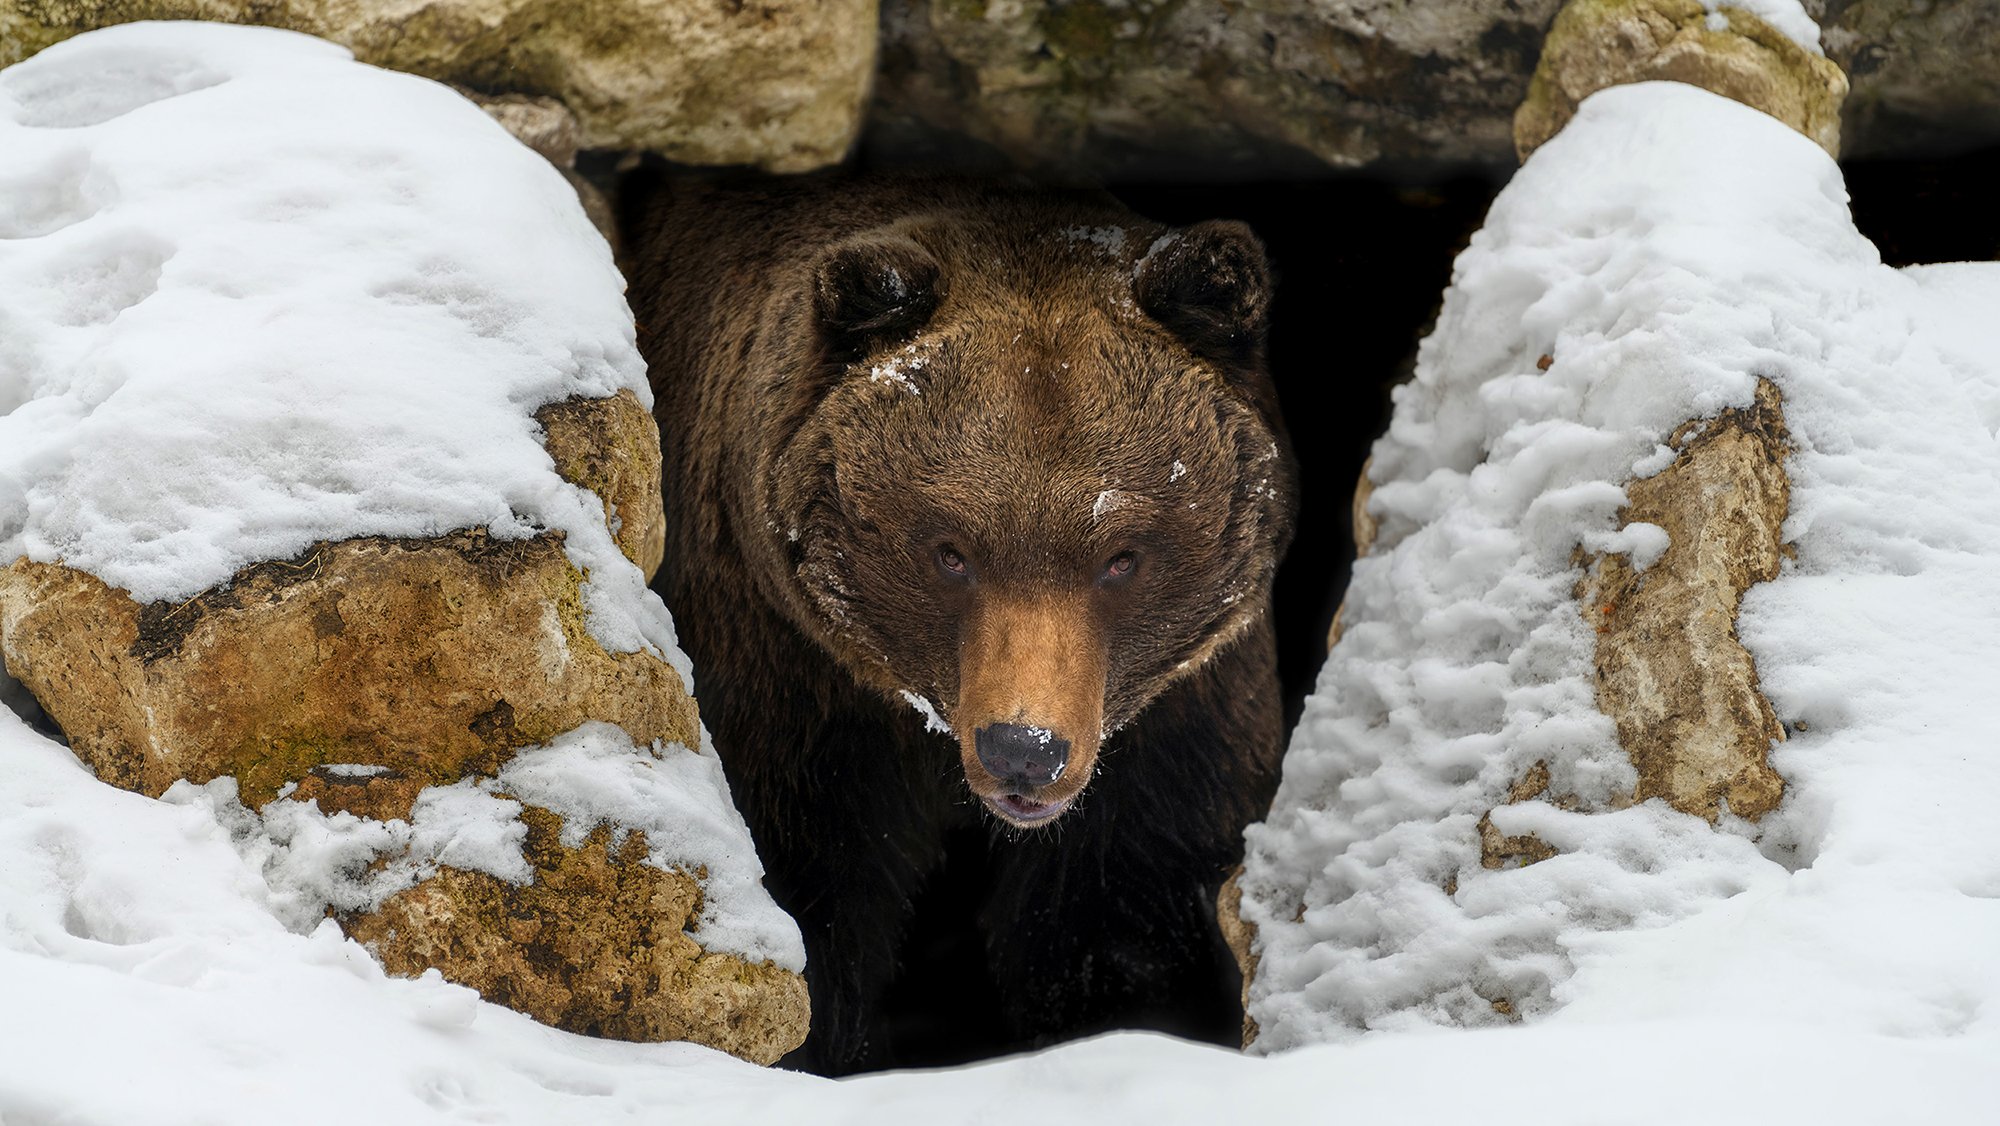 JPM24: Biotech investors tip toe around the bear market to familiar territory